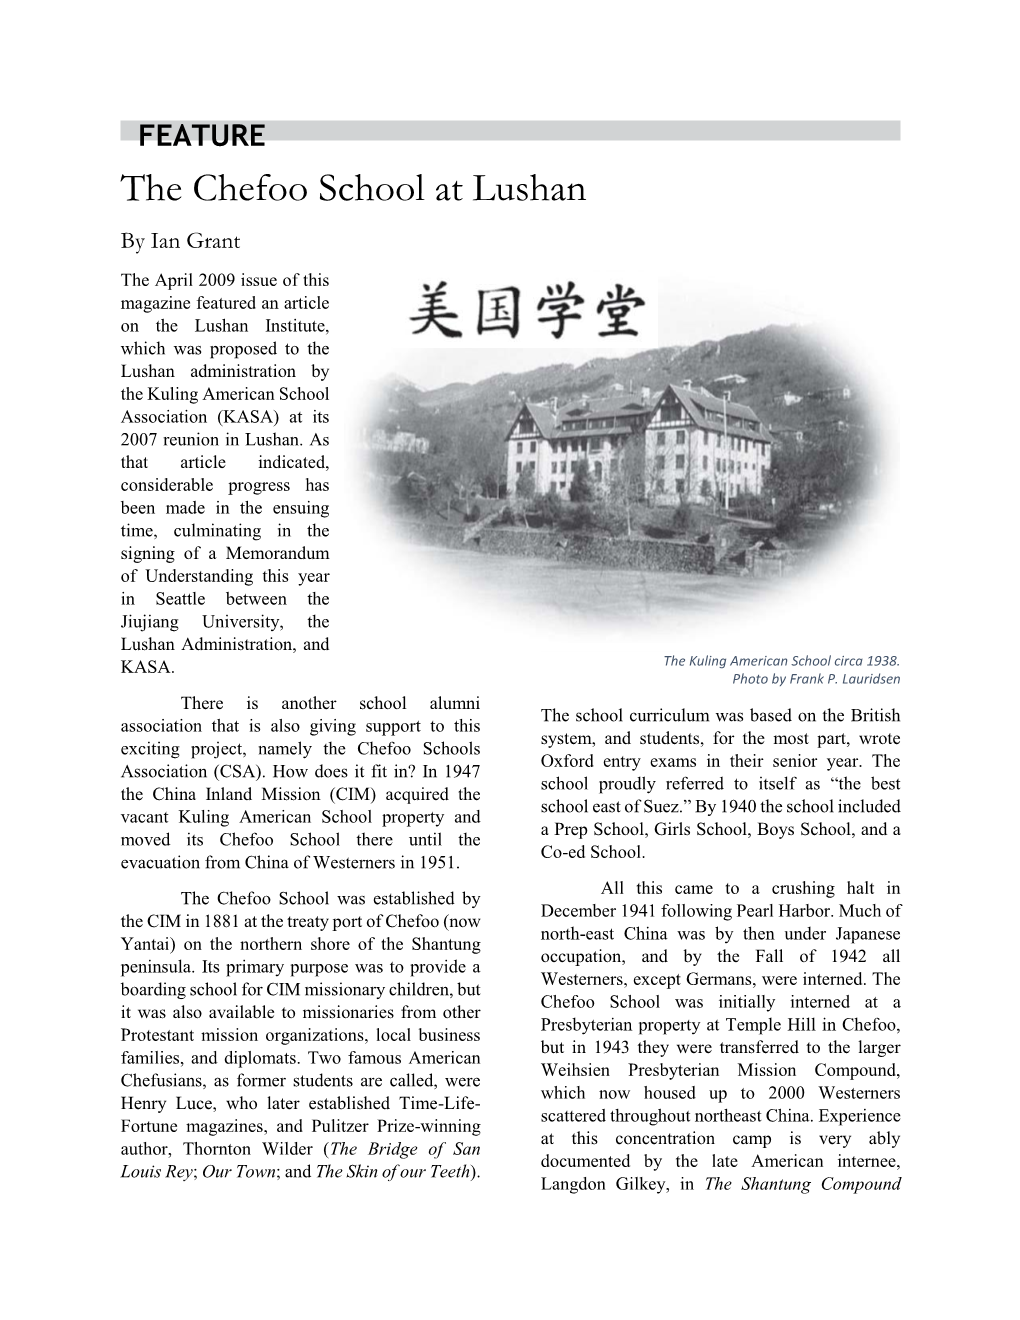 The Chefoo School at Lushan